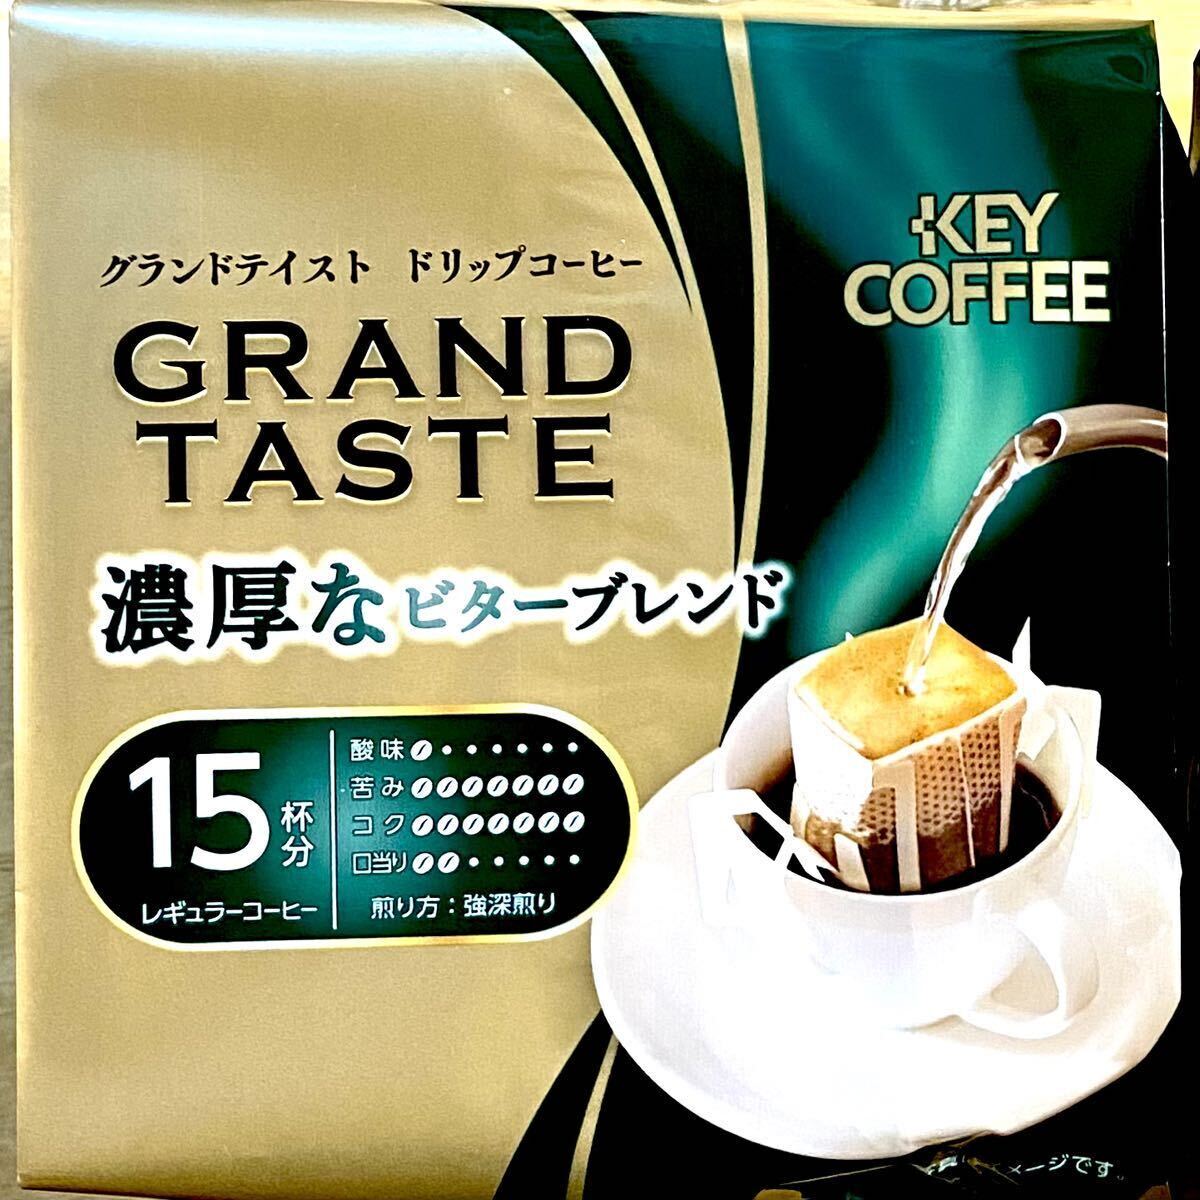  regular coffee drip coffee [ key coffee 3 kind 90 sack ] KEY COFFEE key coffee drip pack coffee * unopened shipping *